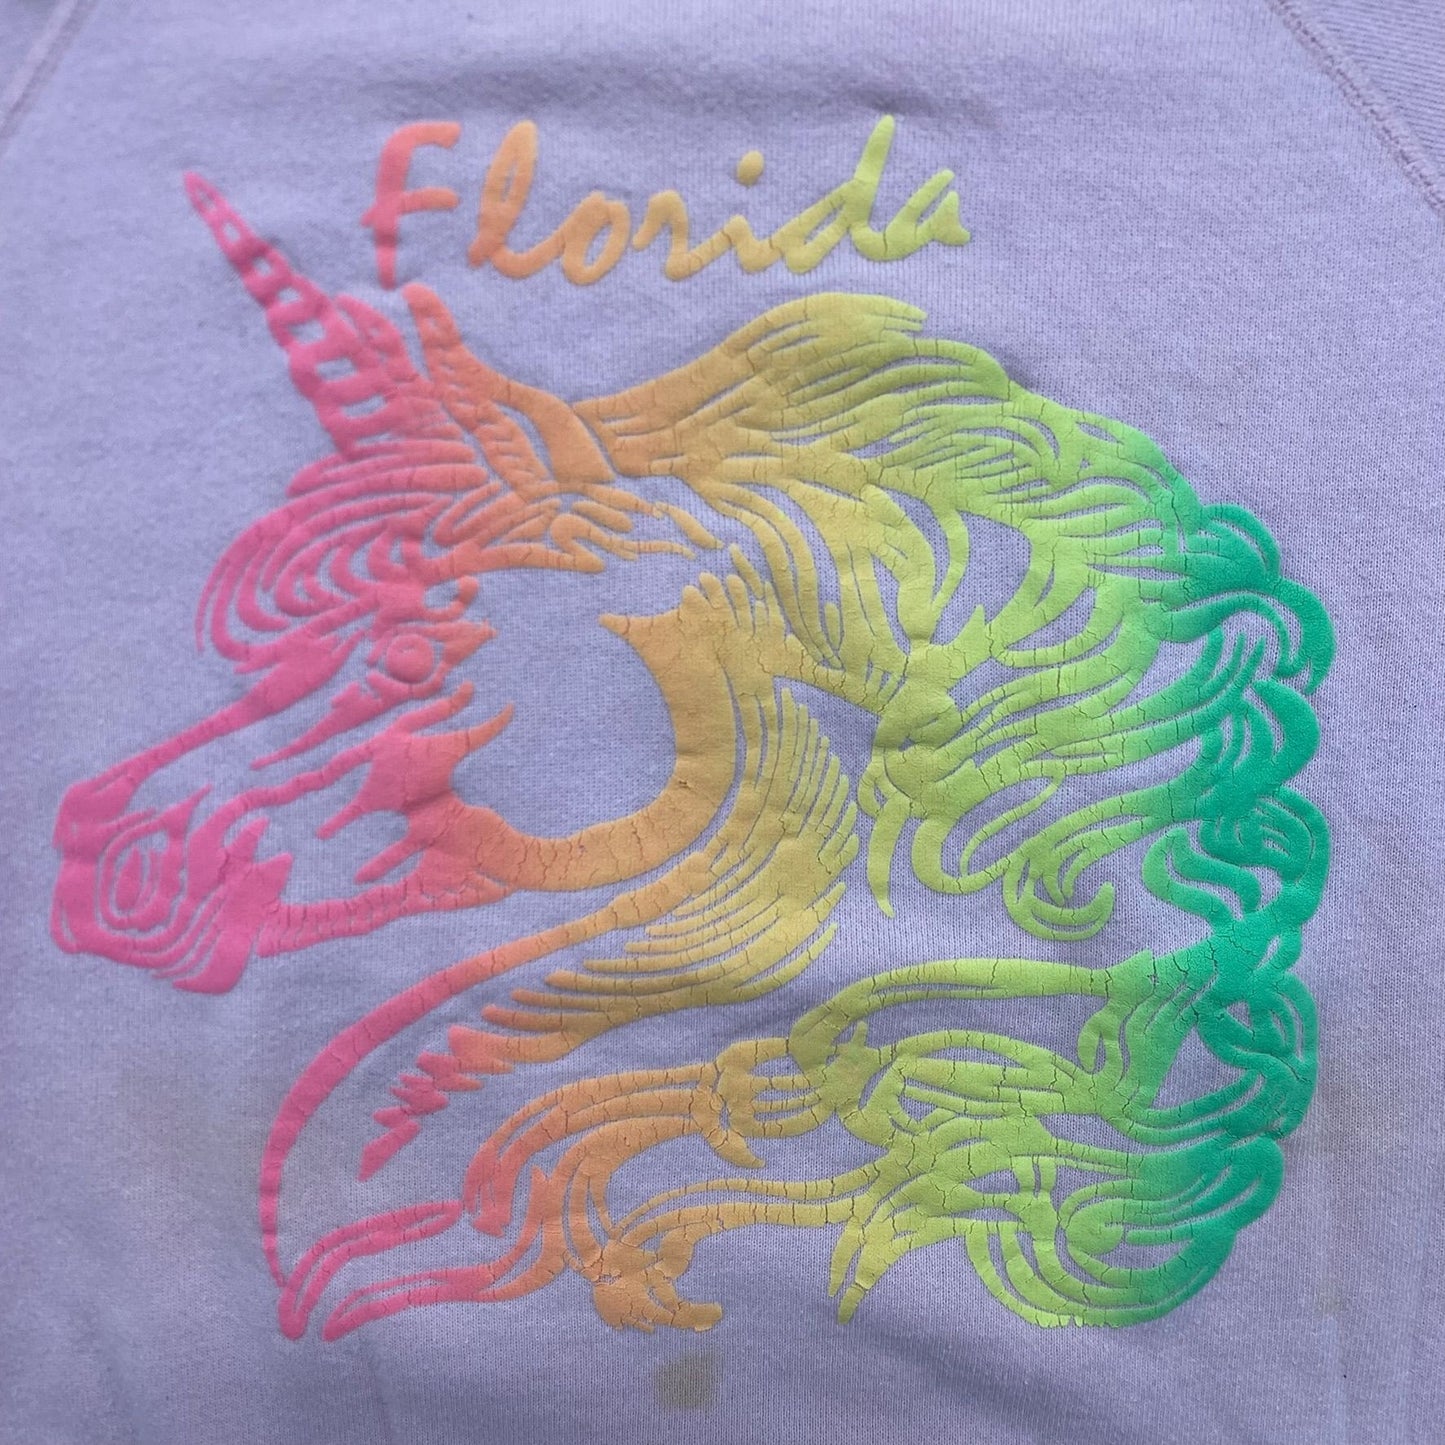 Vintage 80s Florida Rainbow Unicorn Puff Print Sweatshirt